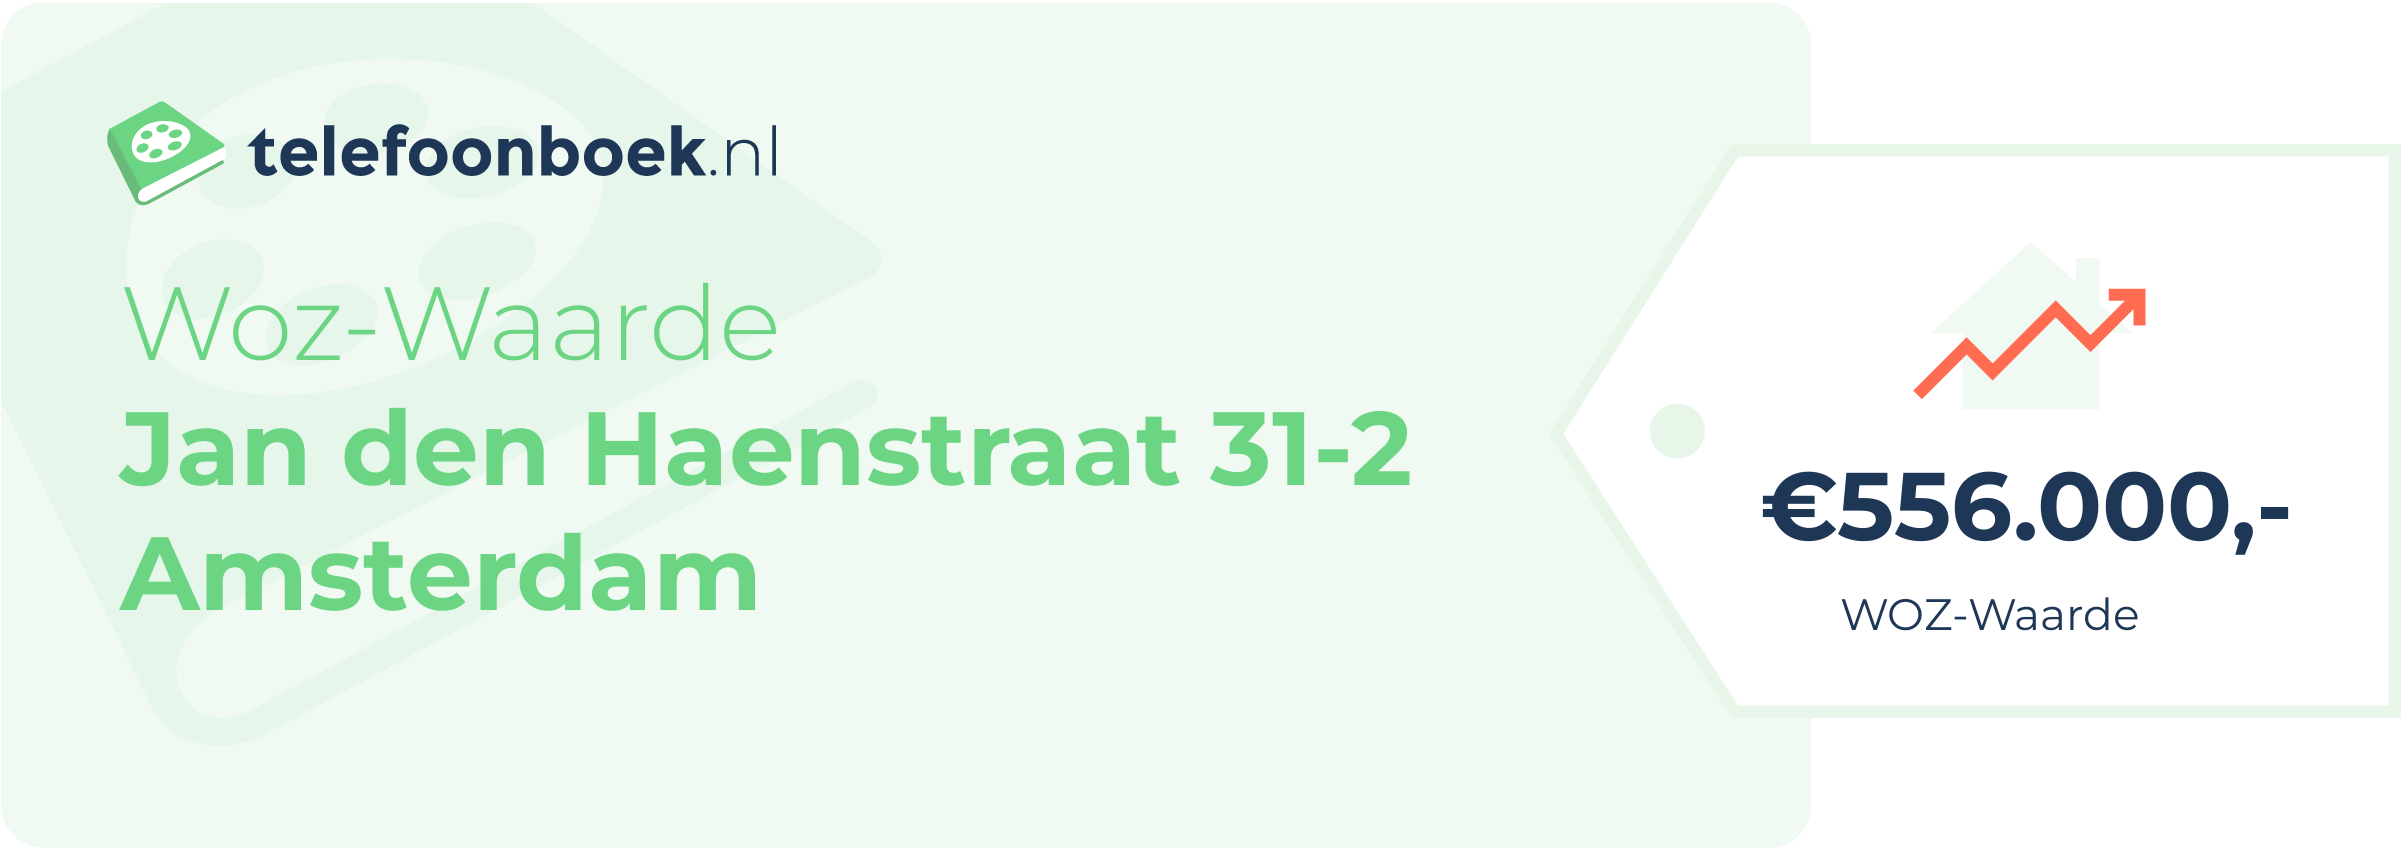 WOZ-waarde Jan Den Haenstraat 31-2 Amsterdam